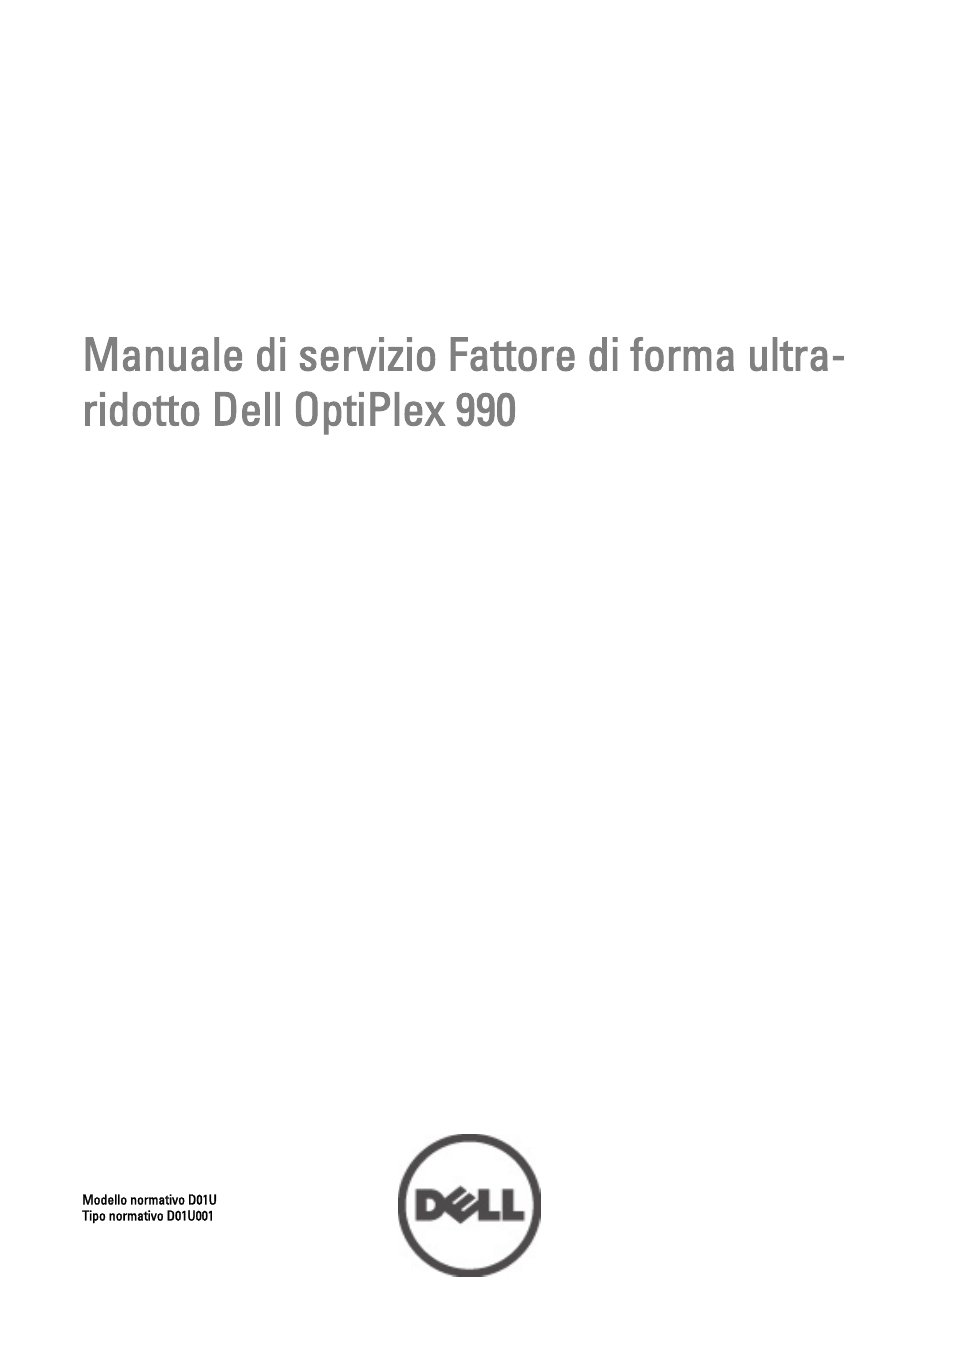 Dell OptiPlex 990 (Early 2011) Manuale d'uso | Pagine: 101